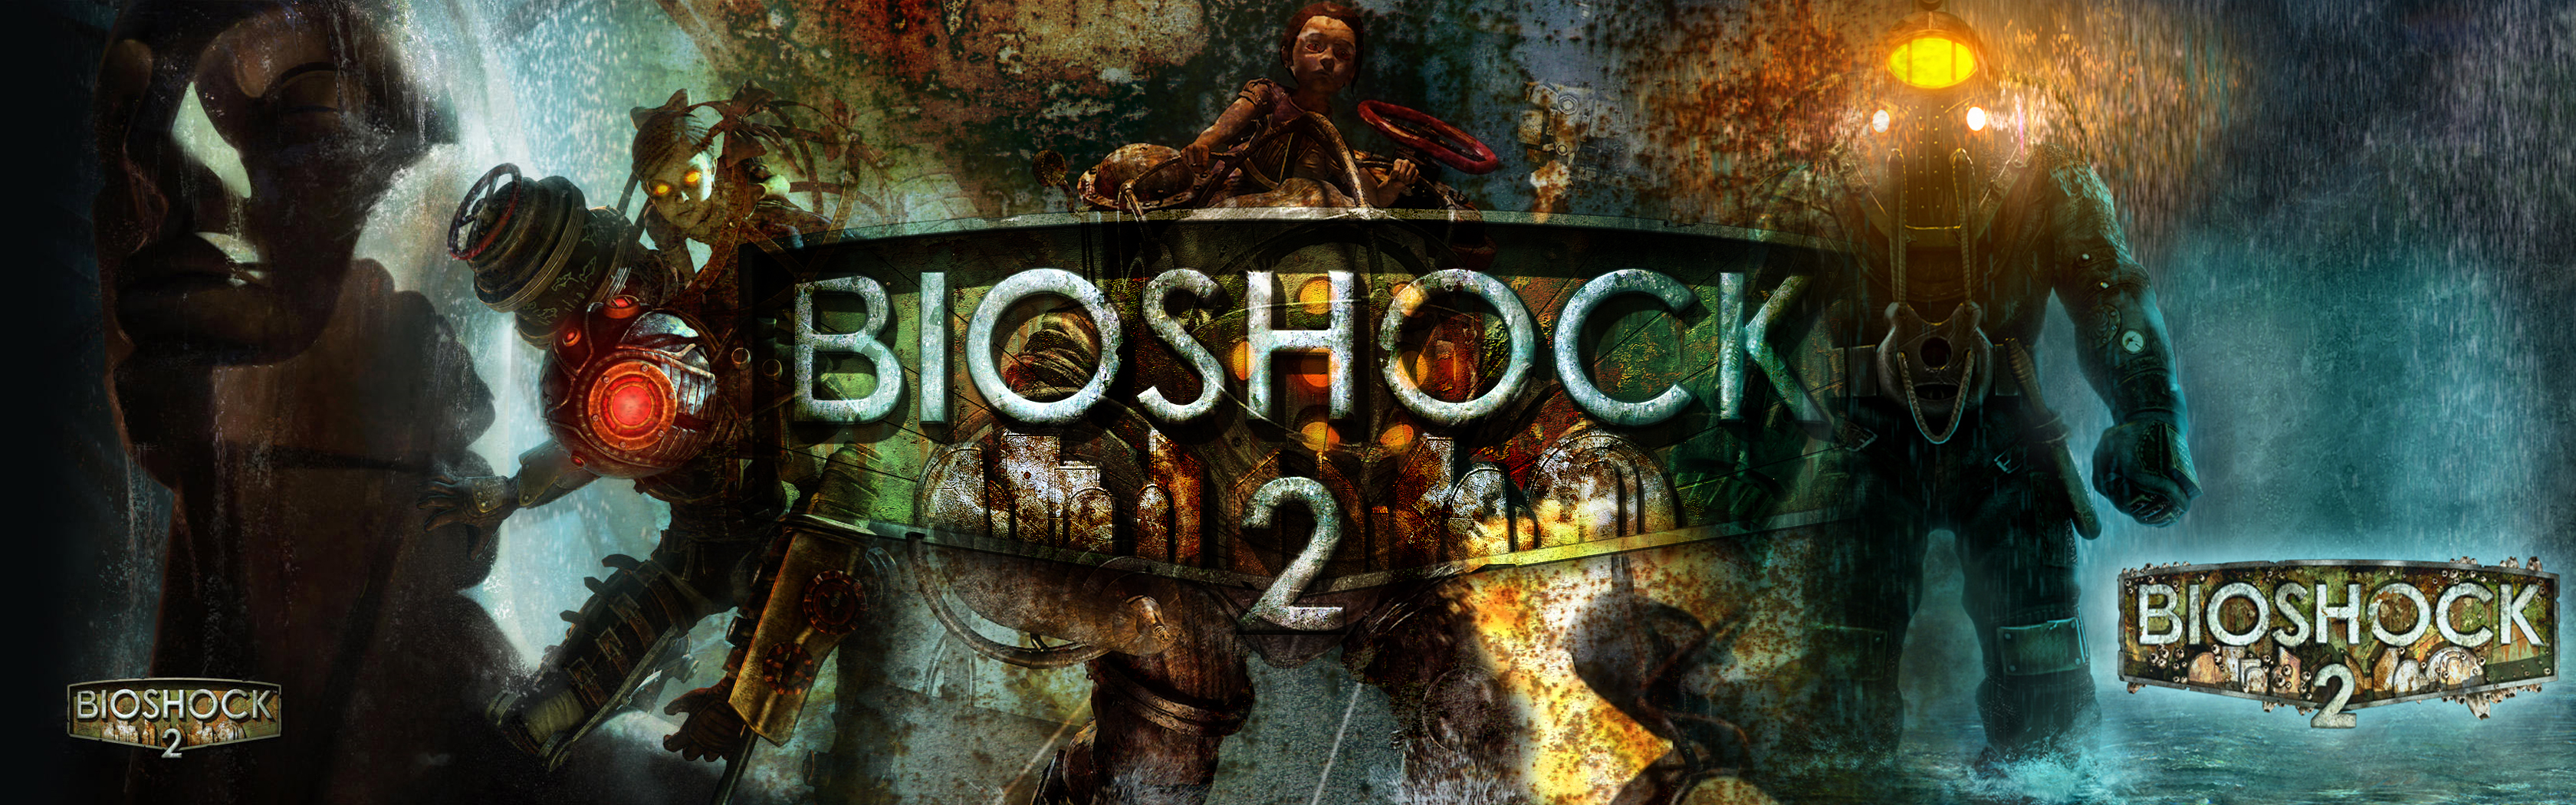 video game, bioshock 2, bioshock